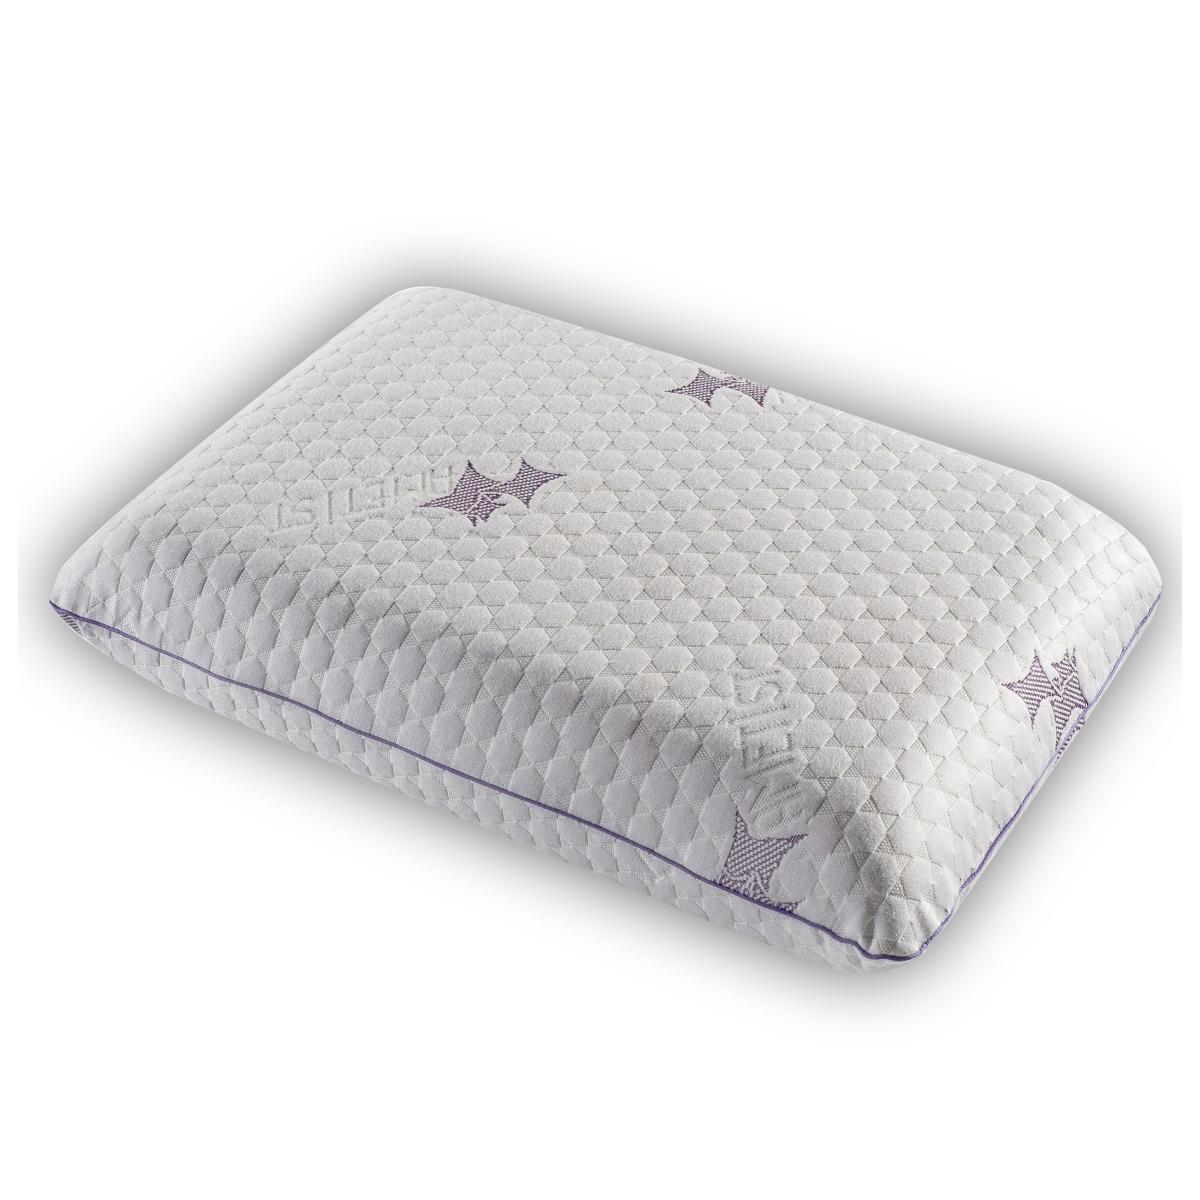 Decorotika AMPLW01 23.6 x 15.7 x 5.5 in. Serene Sleep Miracle Visco Memory Foam Neck Support Pillow